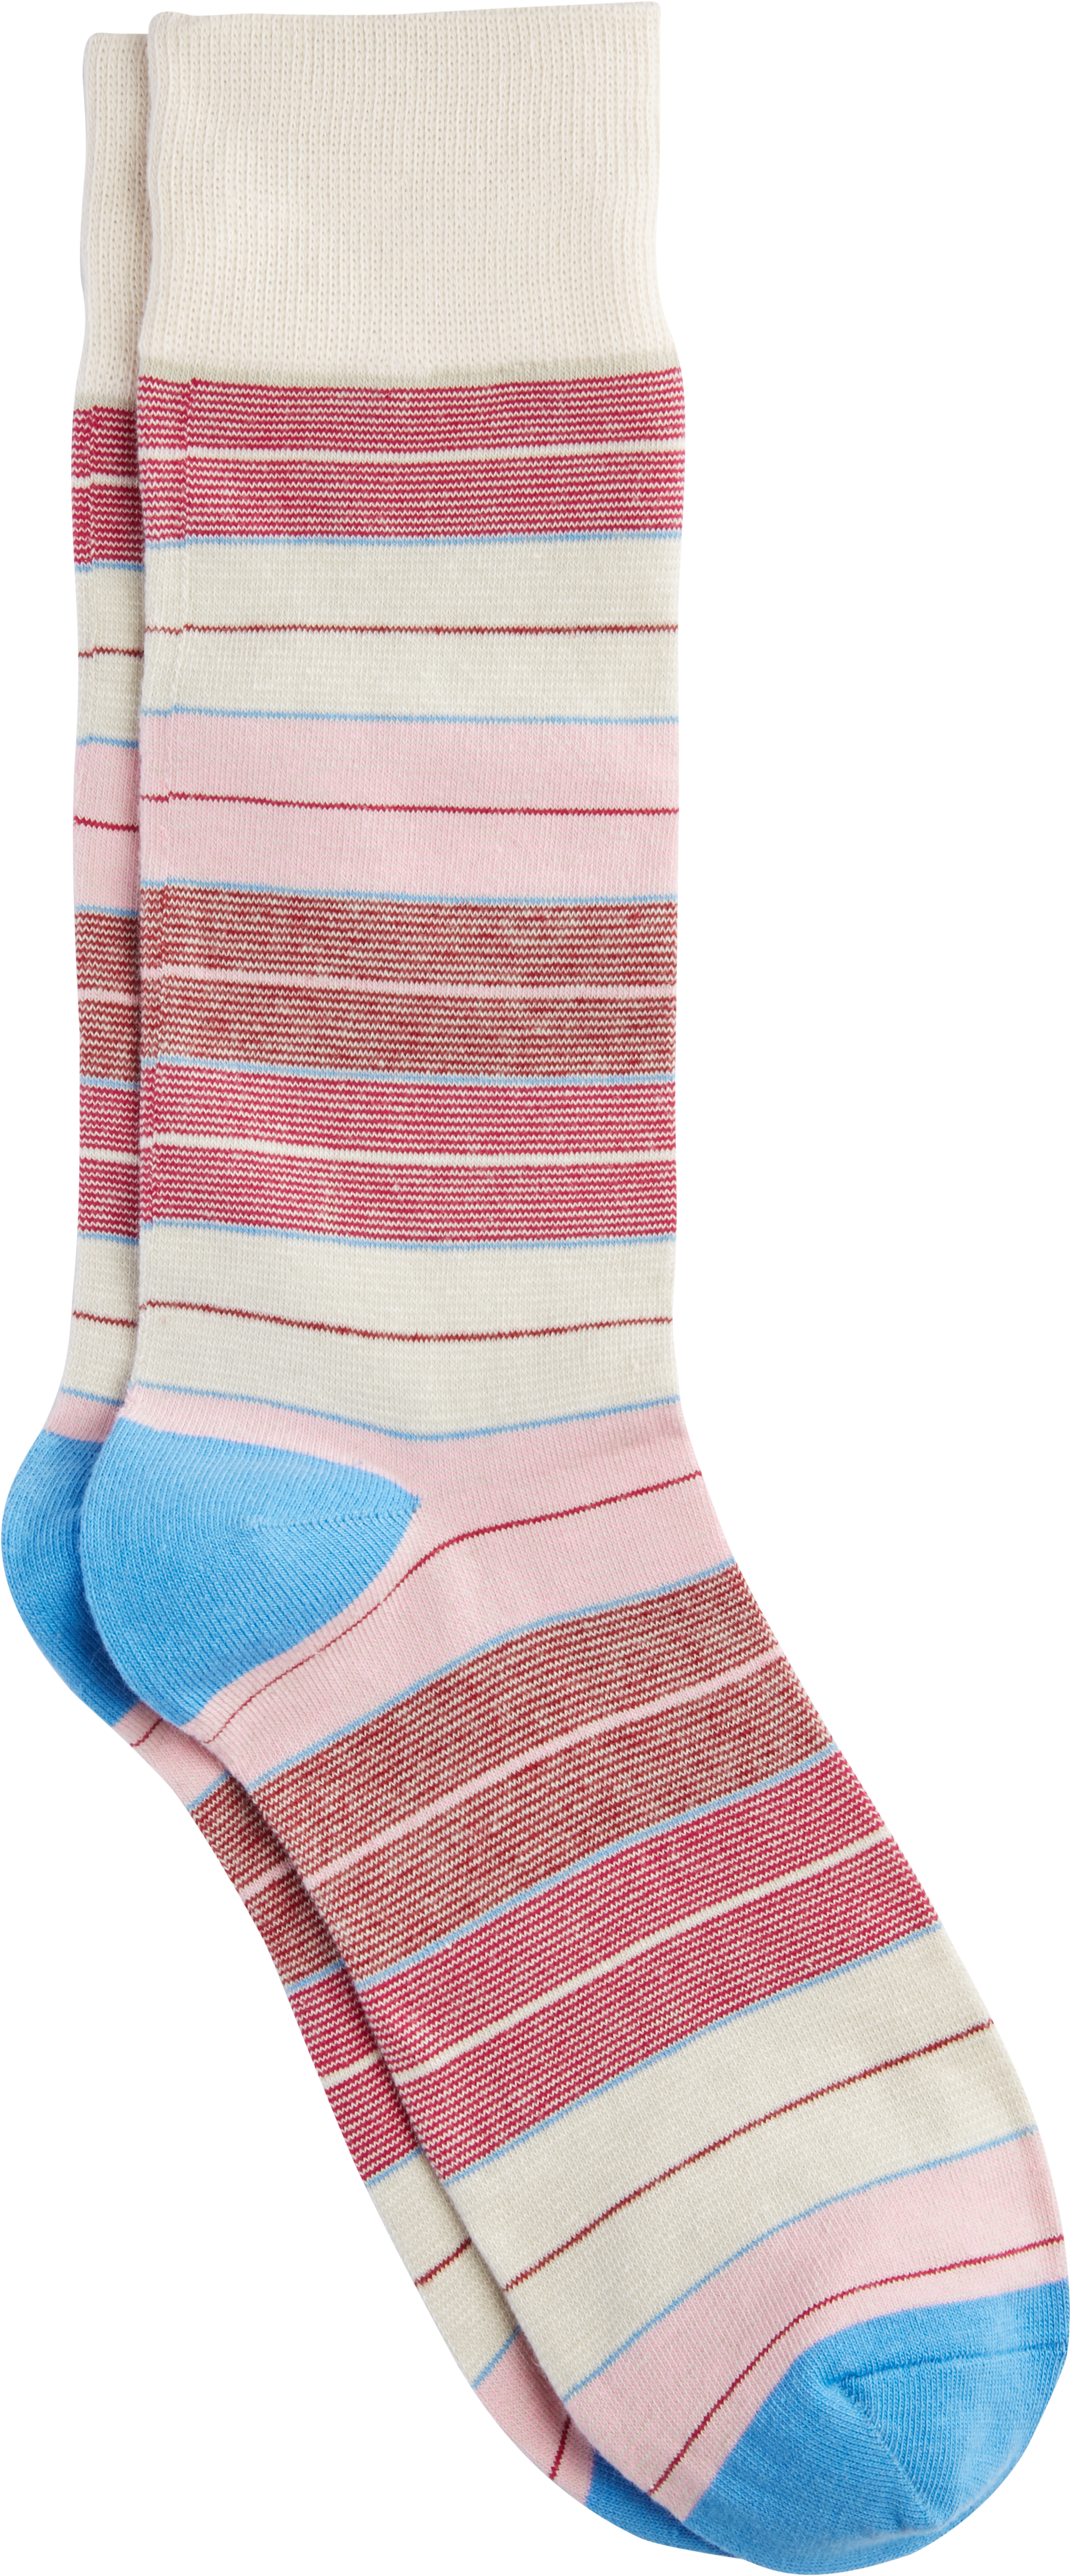 Egara Pink Stripe Socks, 1 Pair - Men's Brands | Men's Wearhouse